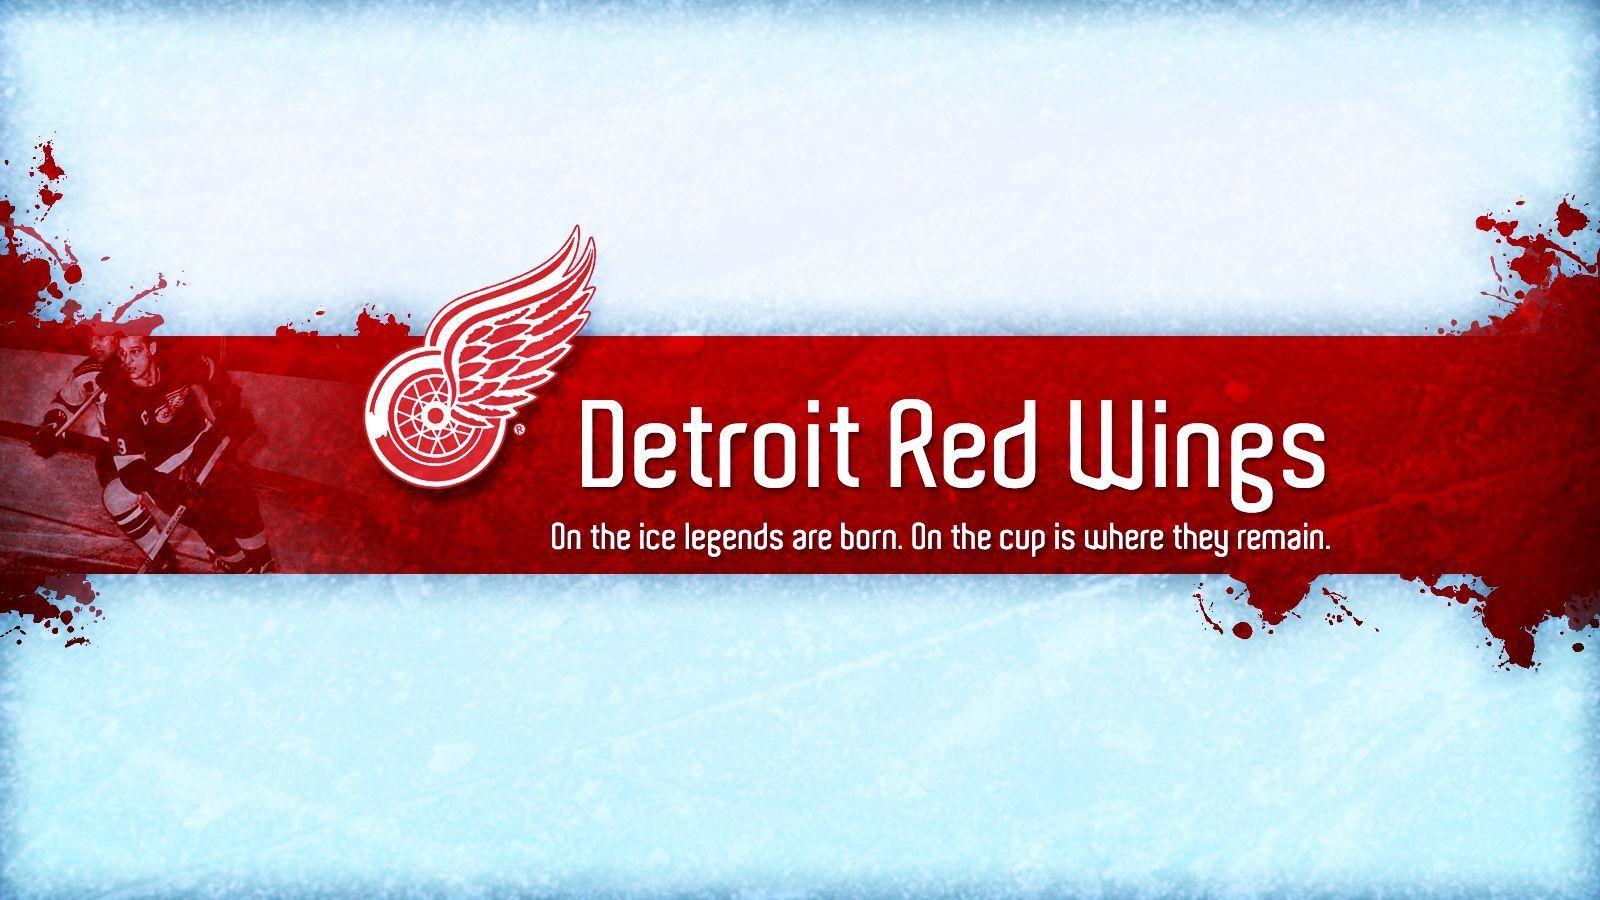 Imágenes de Detroit Red Wings. Fondos de pantalla de Detroit Red